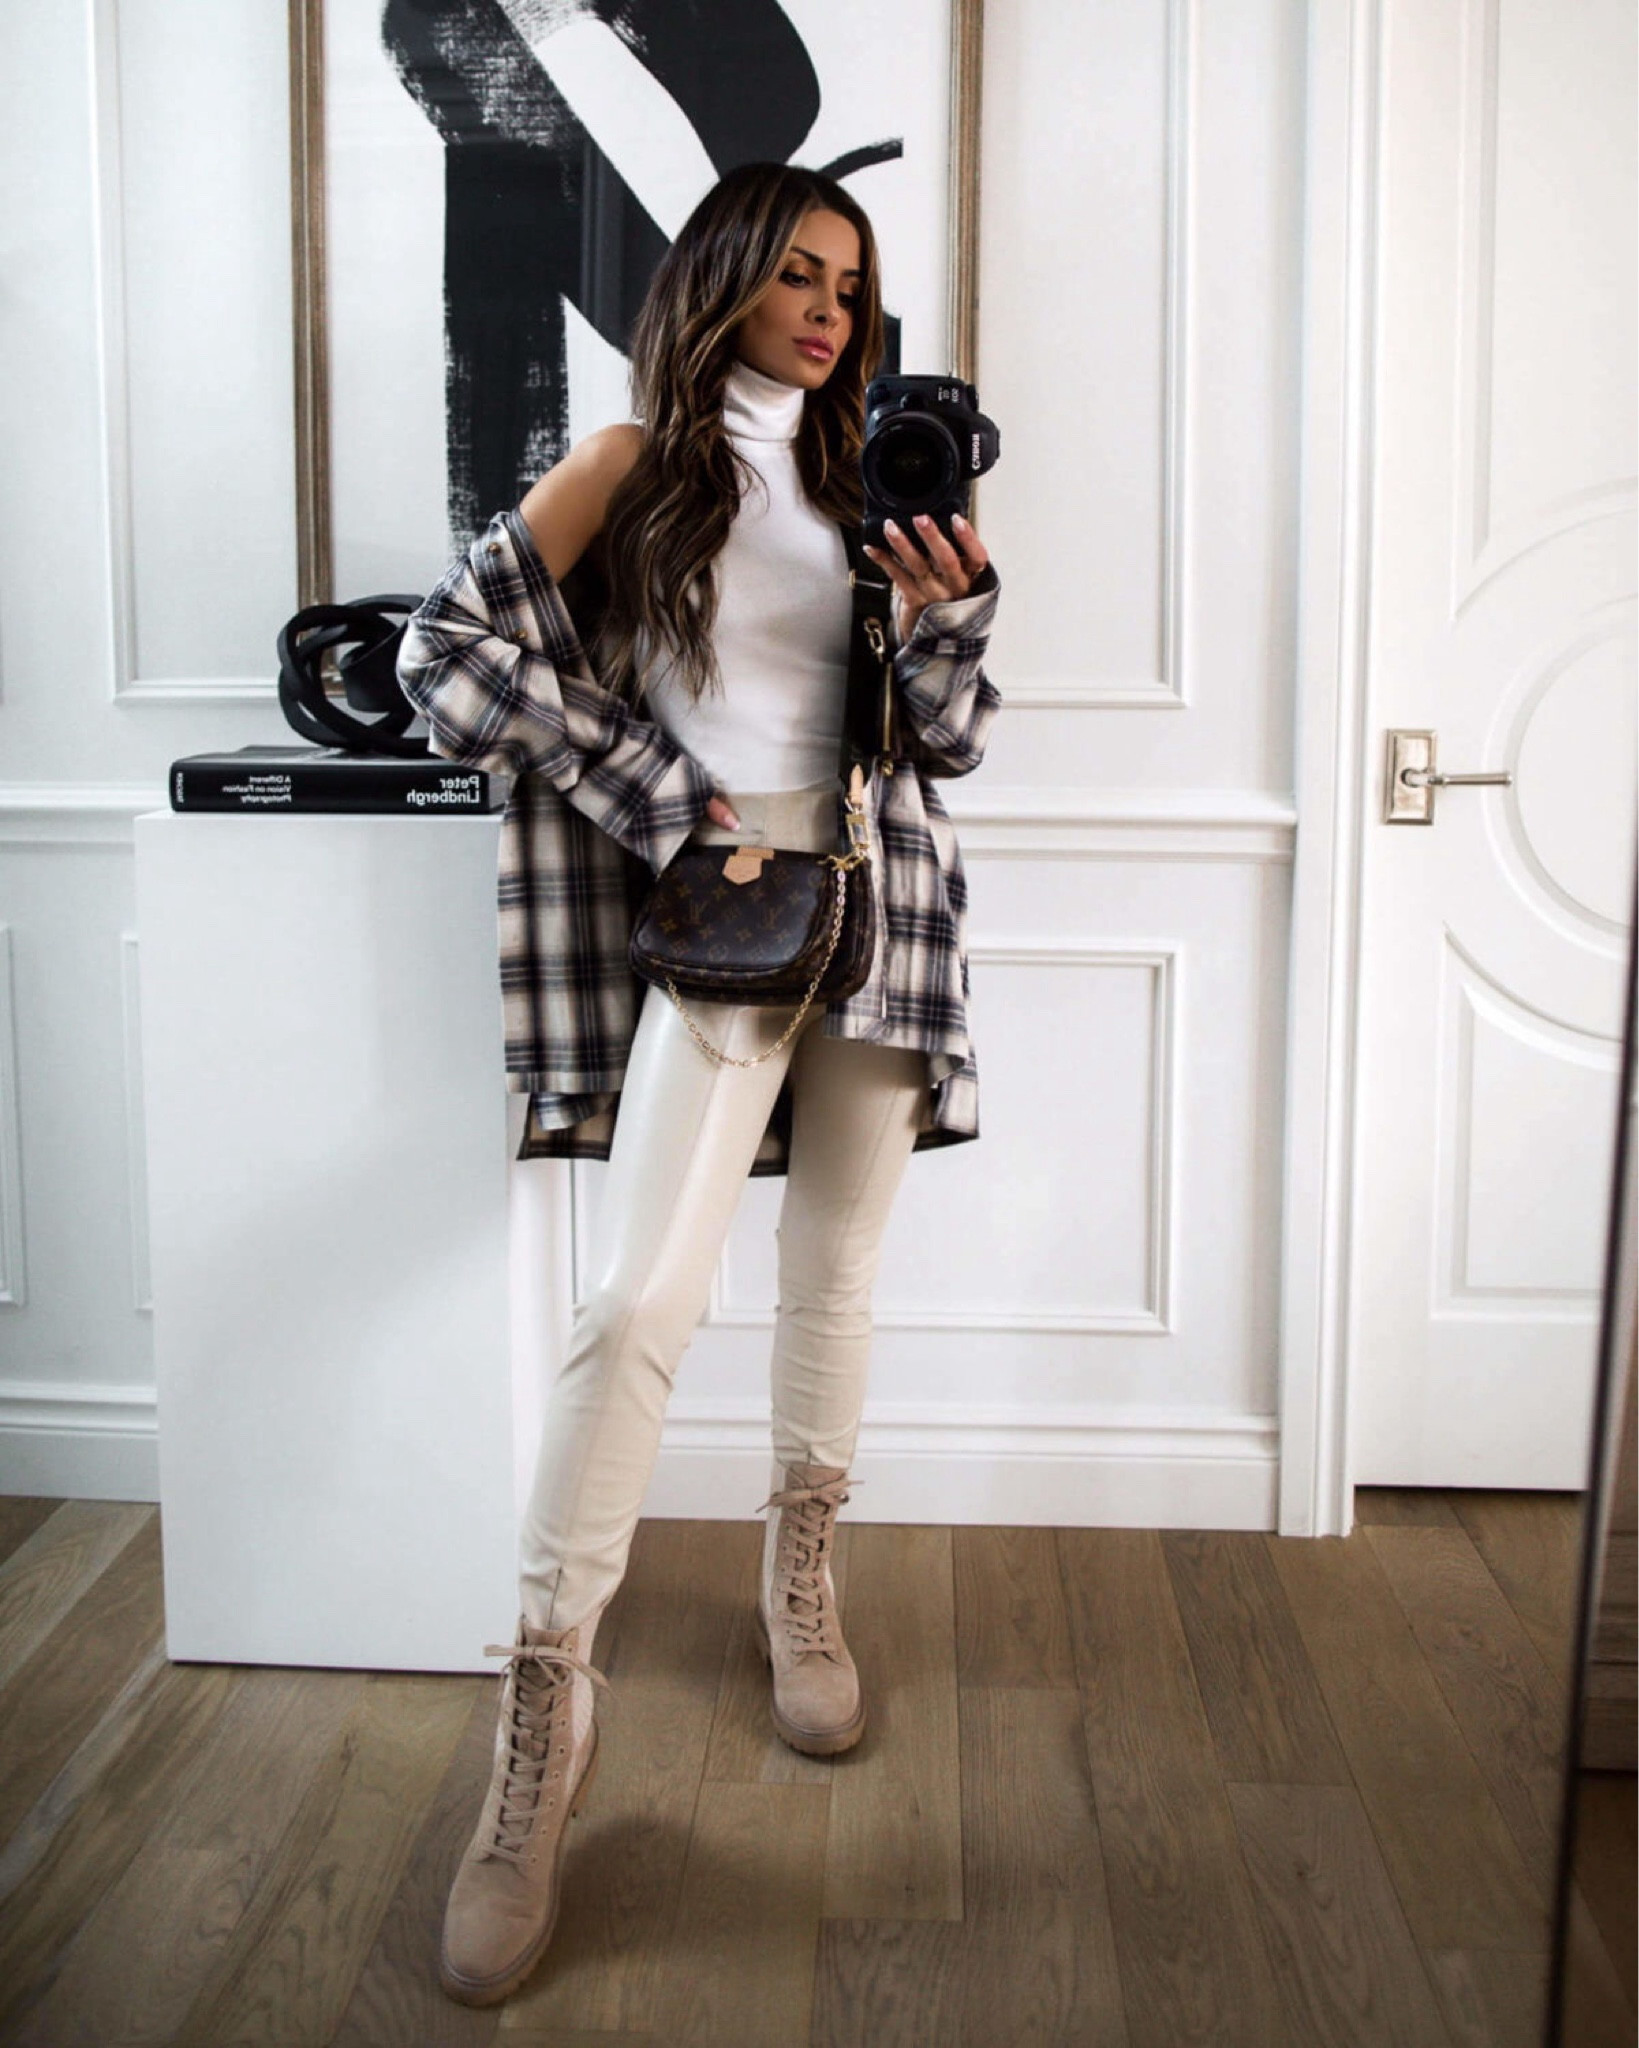 Chanel Combat Boots Outfit - Mia Mia Mine